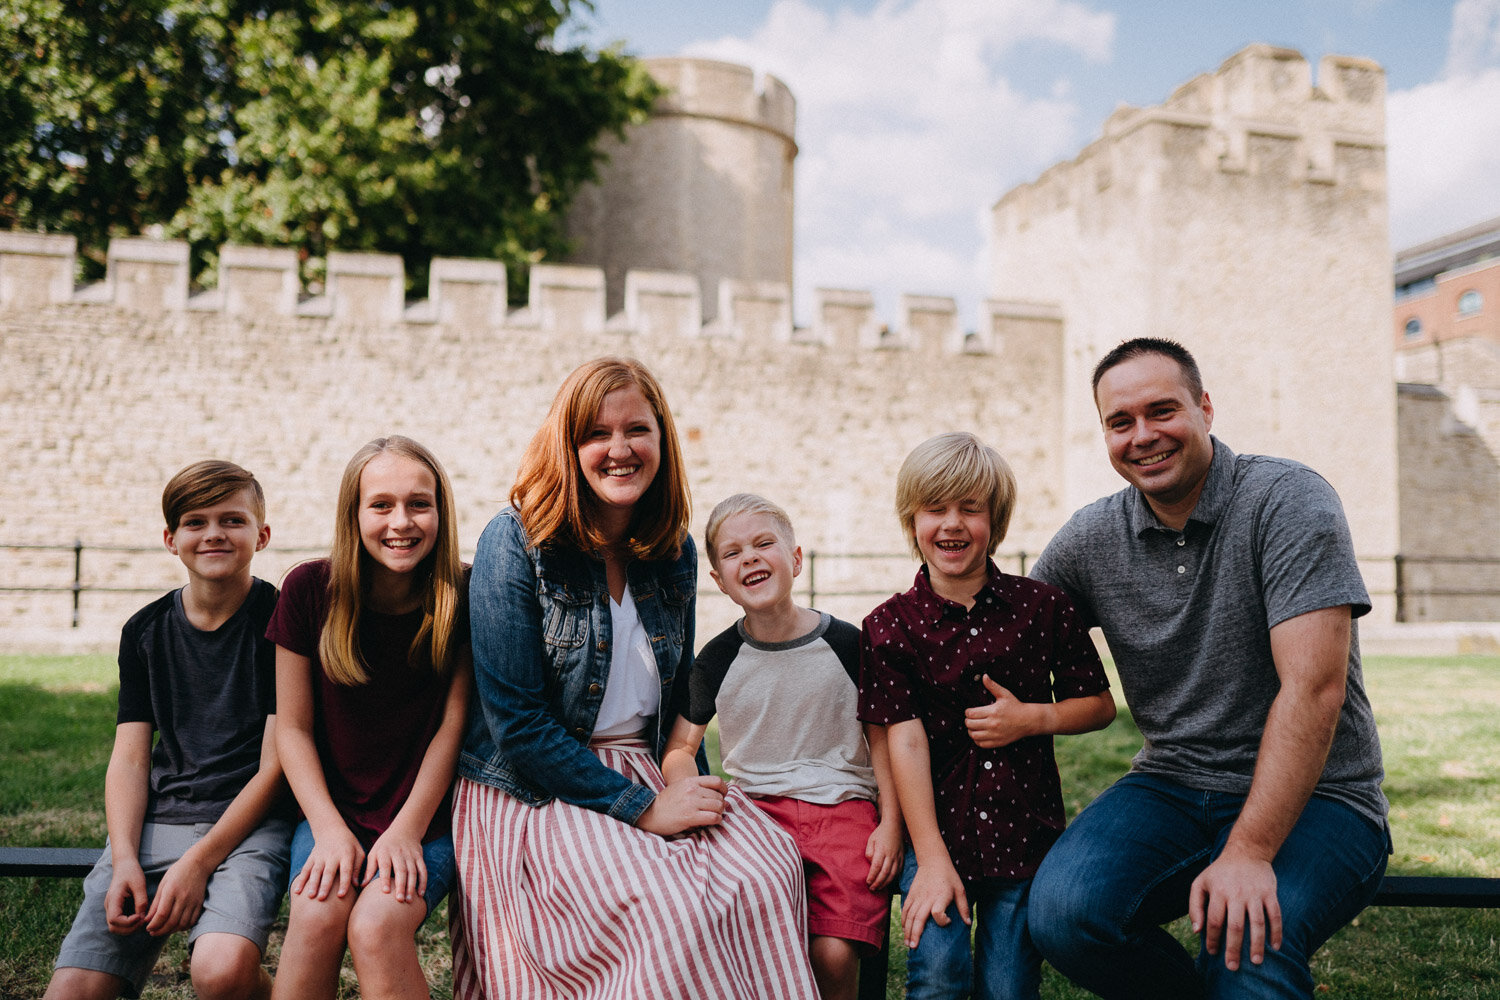 Family portrait photoshoot at Tower Bridge, London